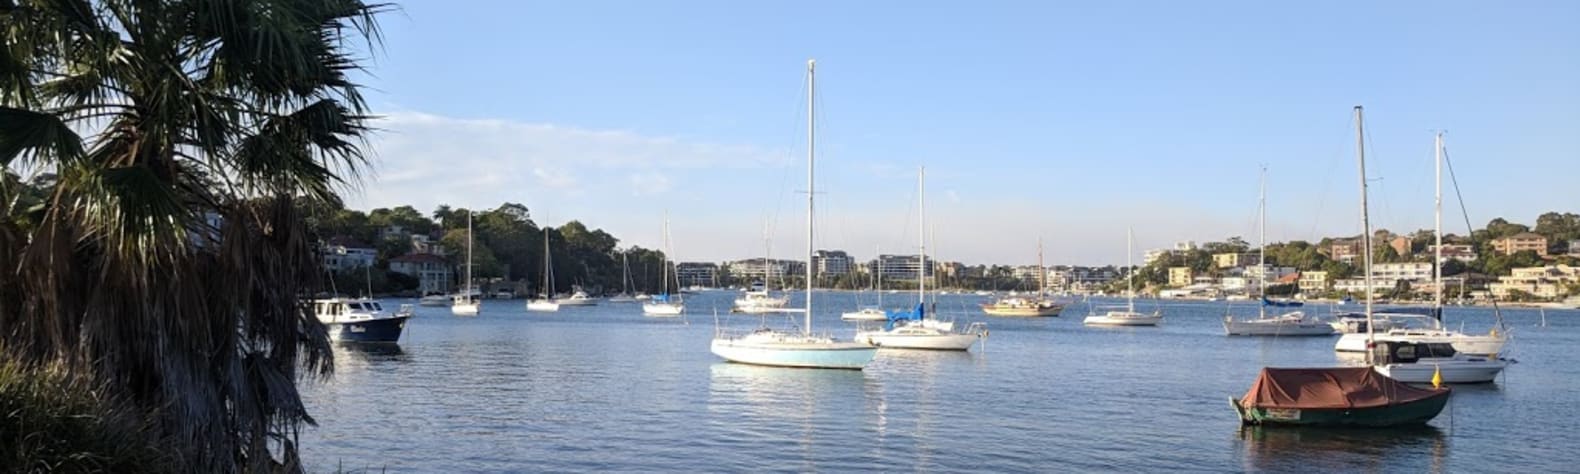 Parramatta River Regional Park